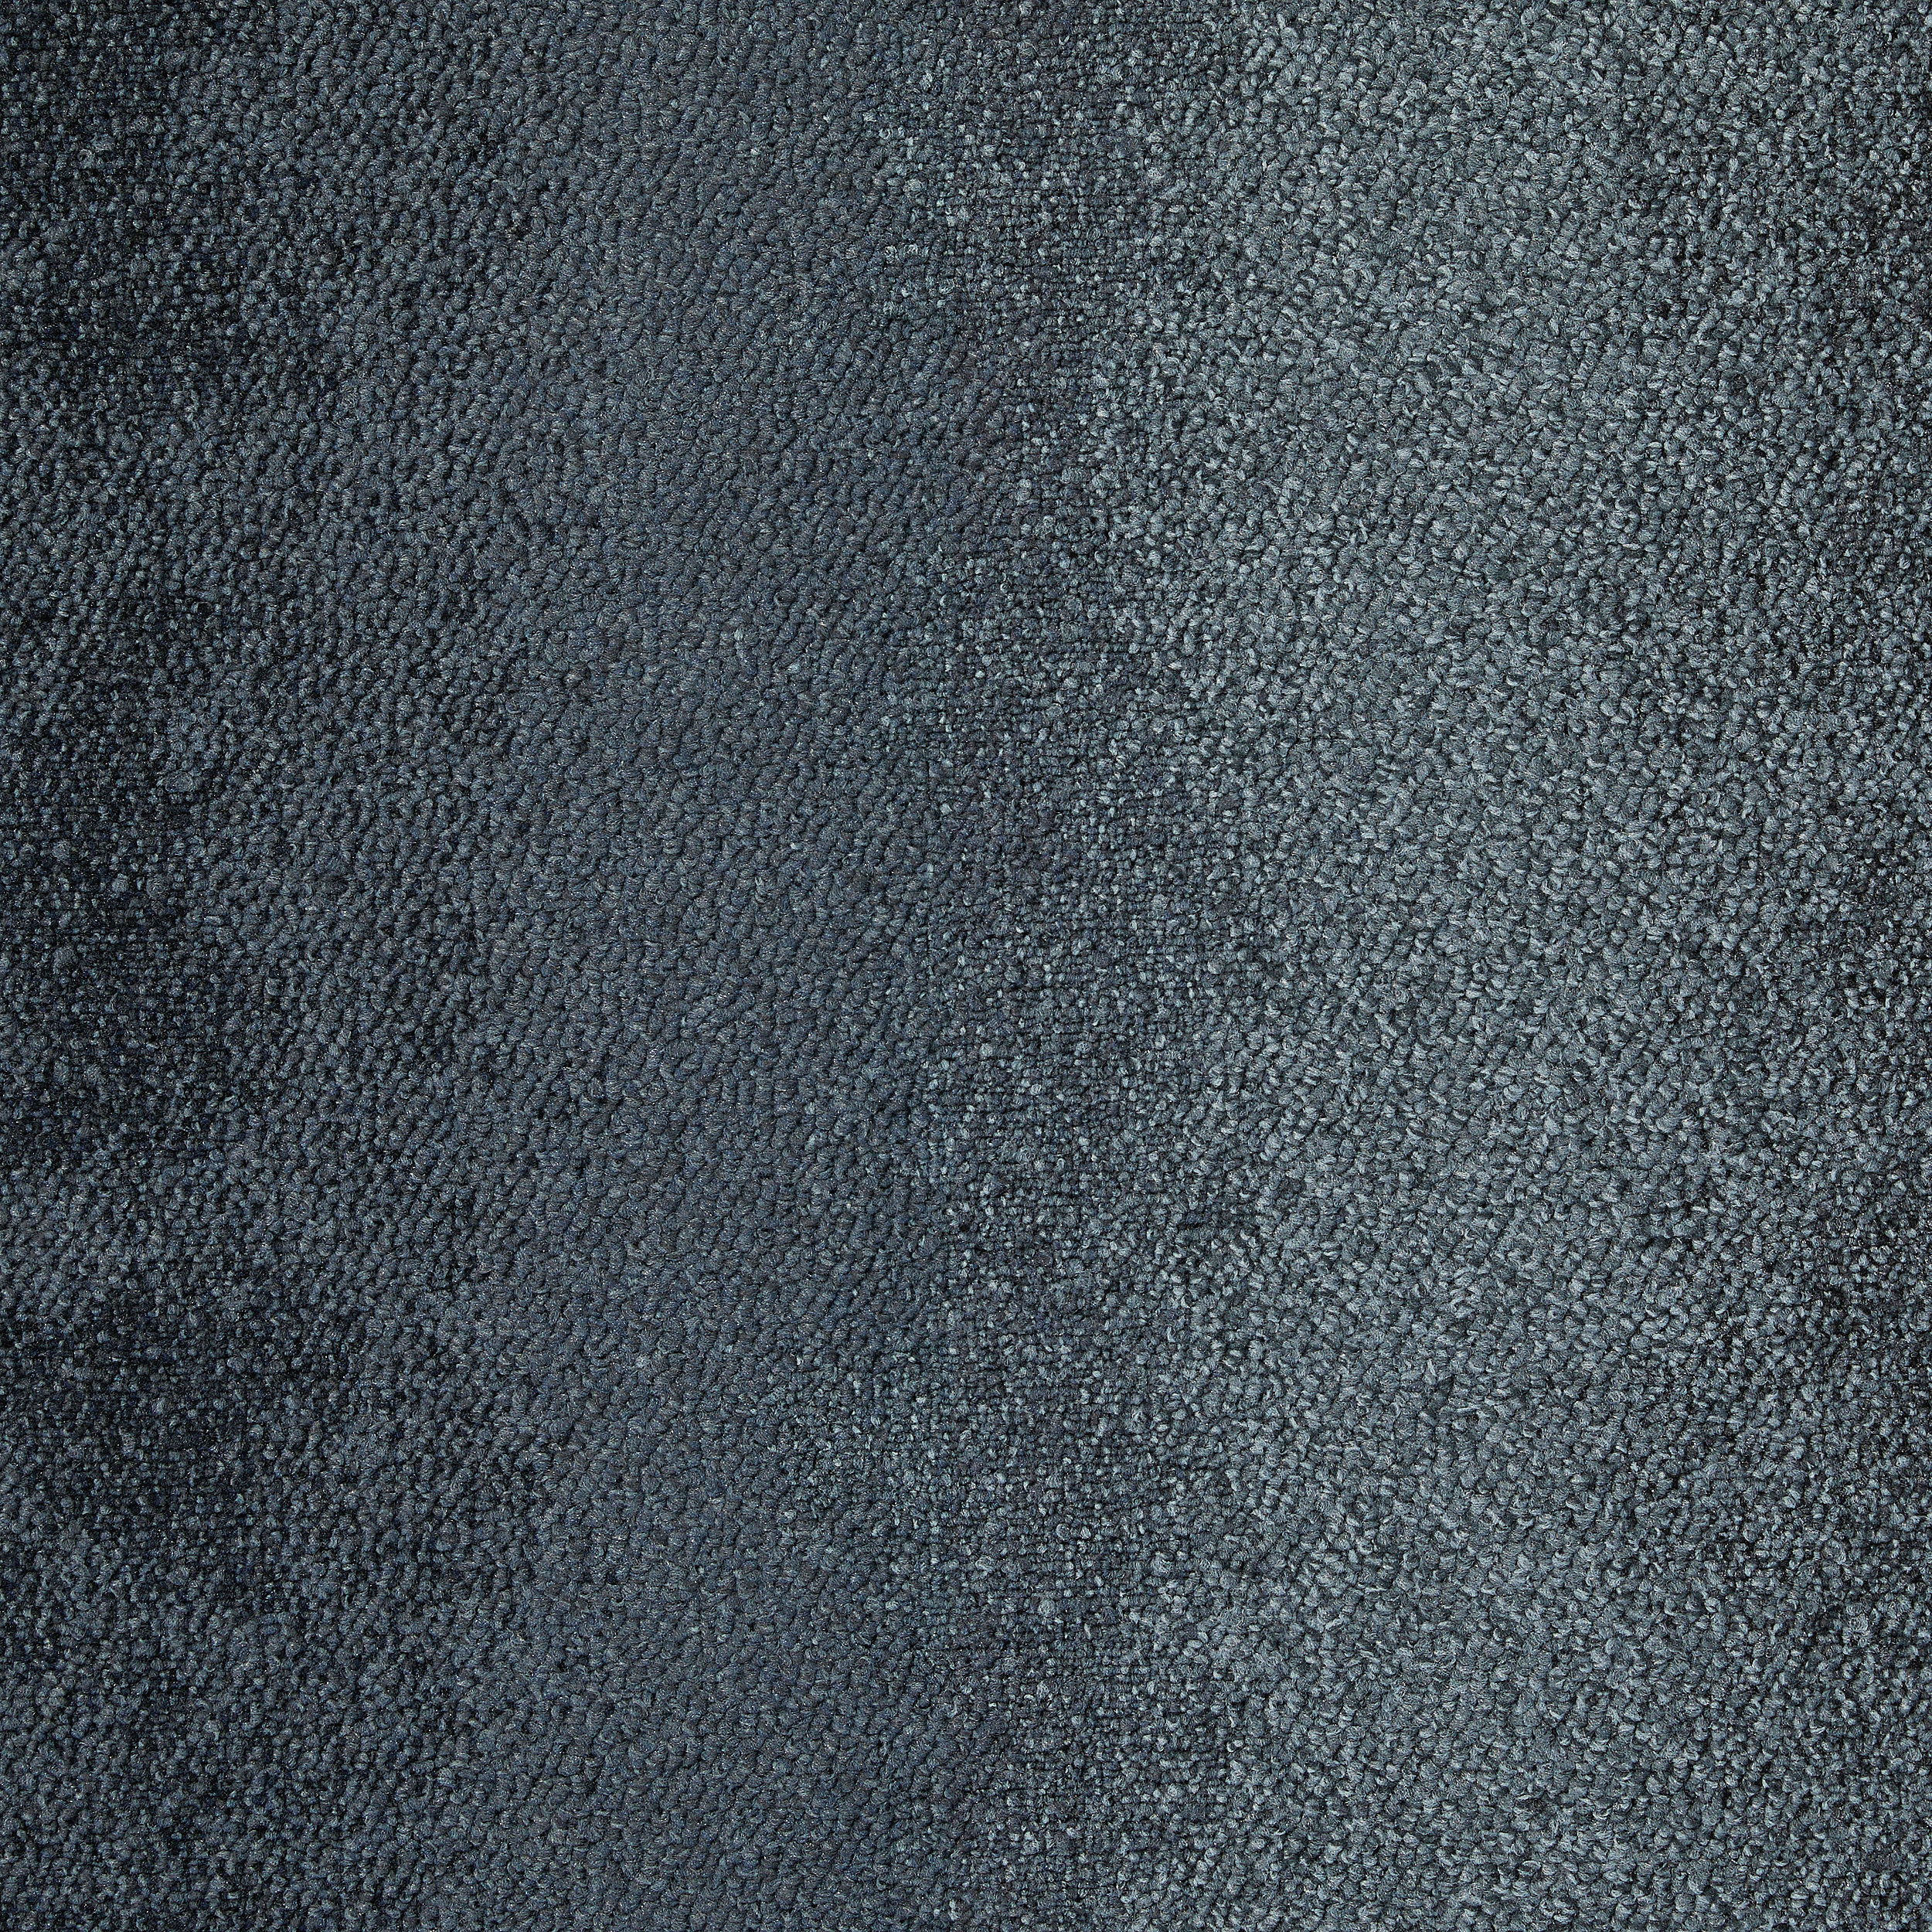 CE200 Carpet Tile in Perceive/Identify número de imagen 8